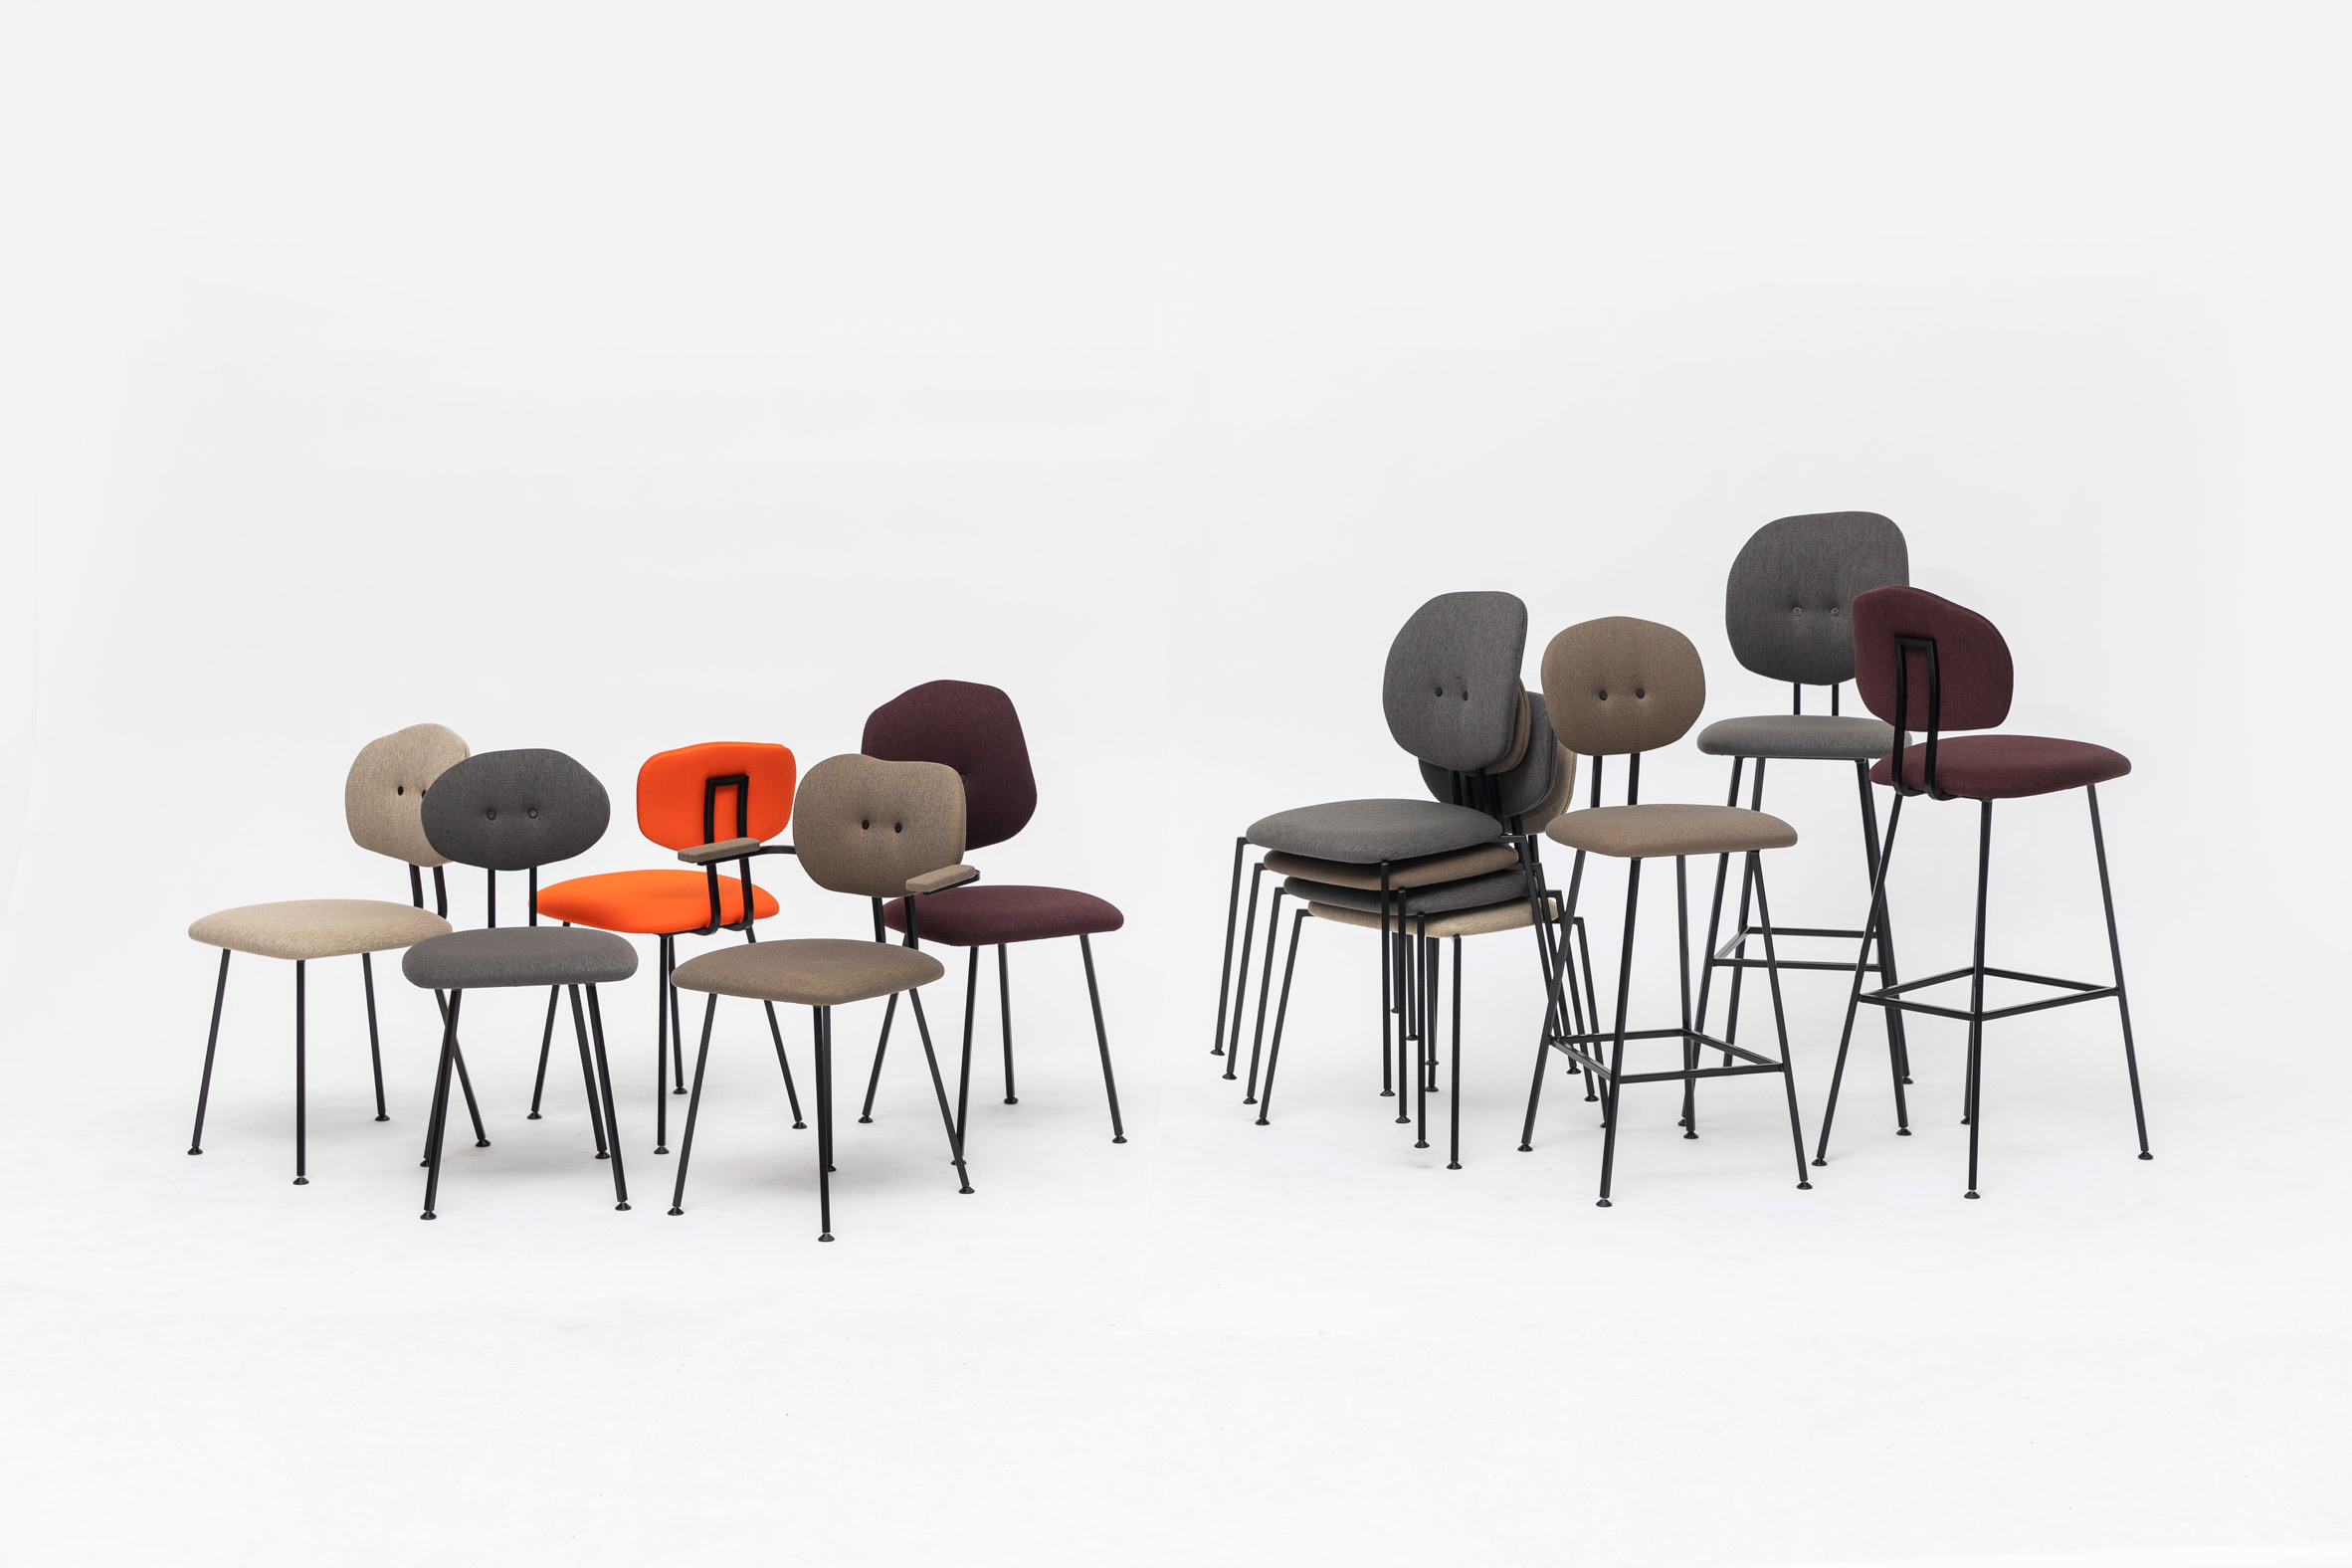 Baas' chairs for Lensvelt